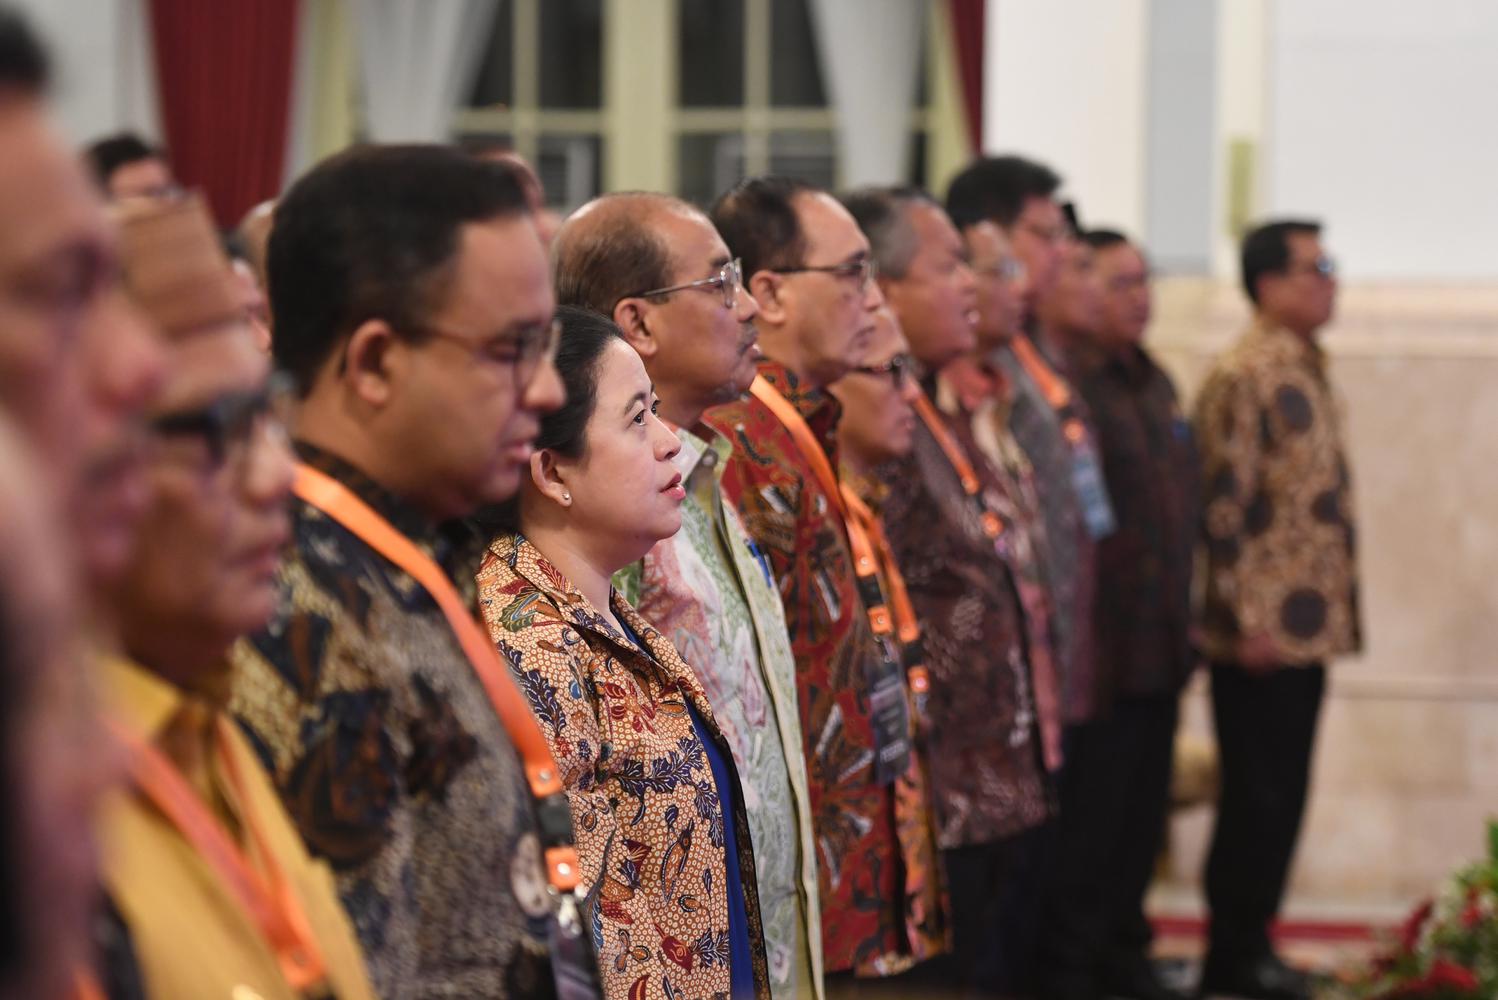 Ketua DPR Puan Maharani (keempat kiri) bersama sejumlah menteri Kabinet Indonesia Maju dan kepala-kepala daerah mengikuti pembukaan Musyawarah Perencanaan Pembangunan Nasional (Musrenbangnas) Rencana Pembangunan Jangka Menengah Nasional (RPJMN) 2020-2024 di Istana Negara, Jakarta, Senin (16/12/2019).